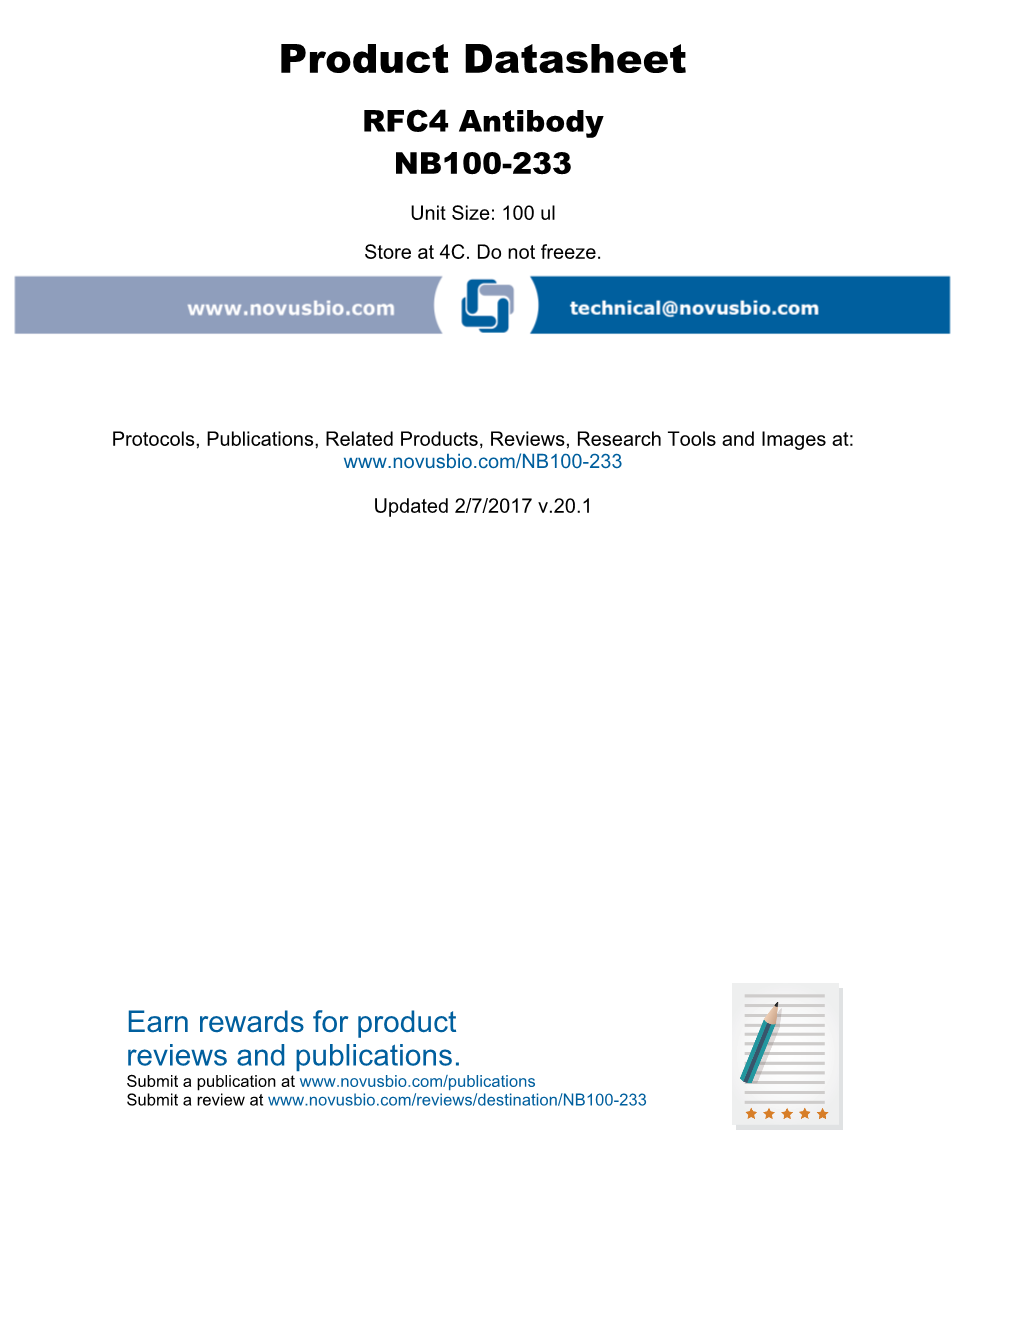 Product Datasheet RFC4 Antibody NB100-233